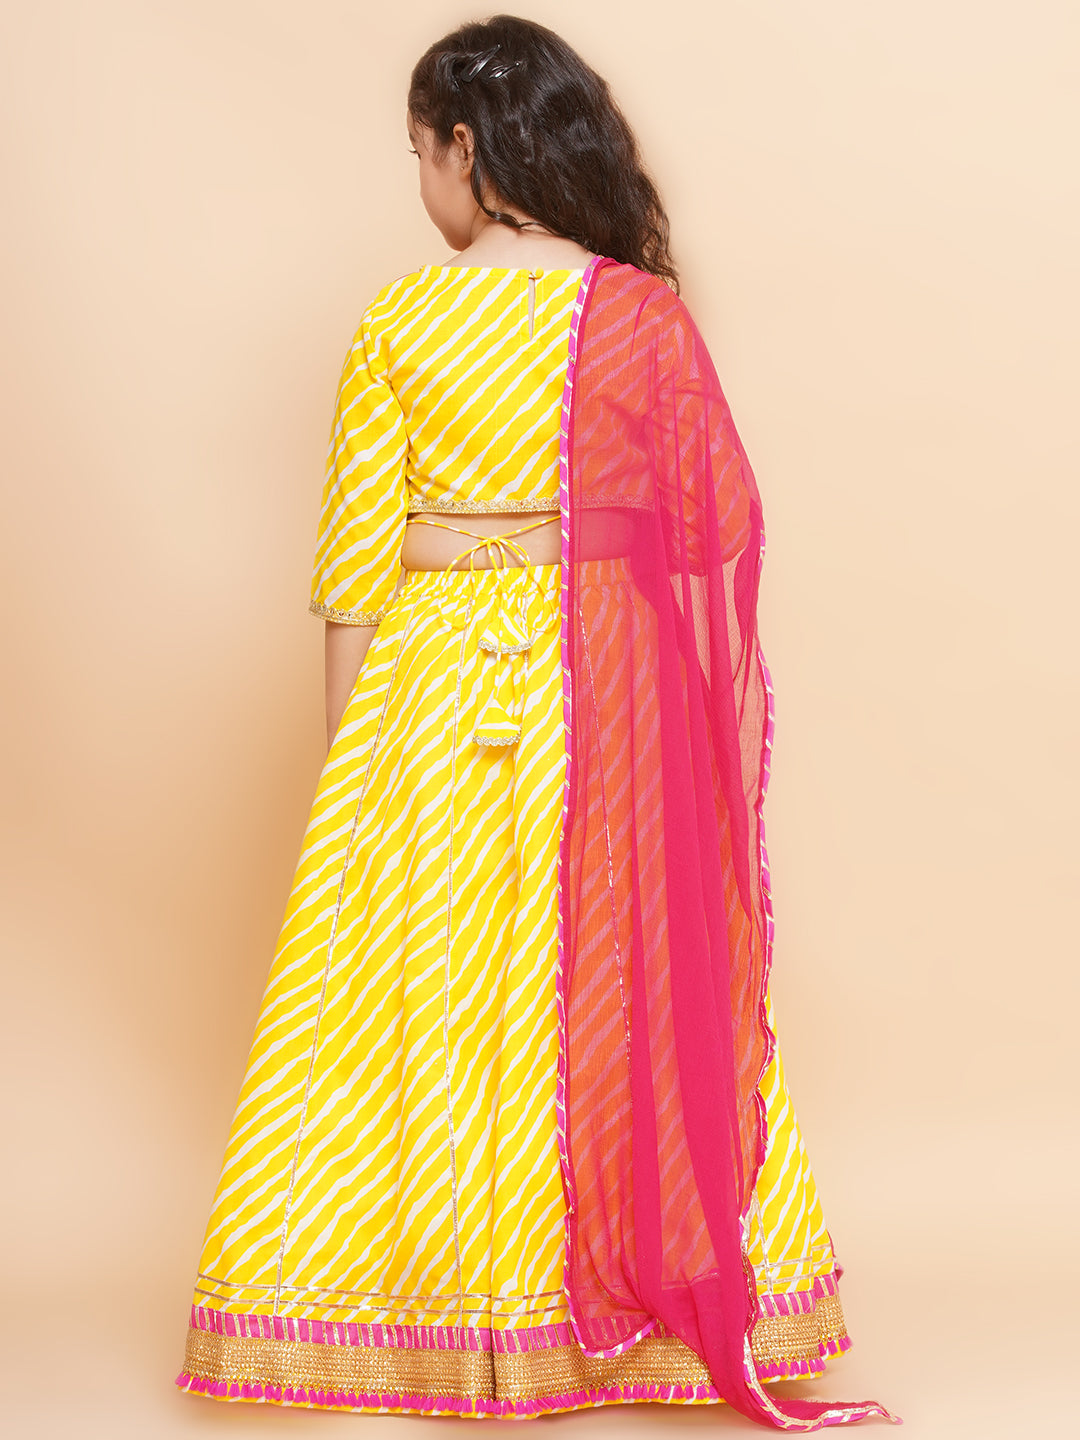 Bitiya by Bhama Girls Yellow Leheriya Printed Lehenga & Pink Embroidered Choli with Dupatta